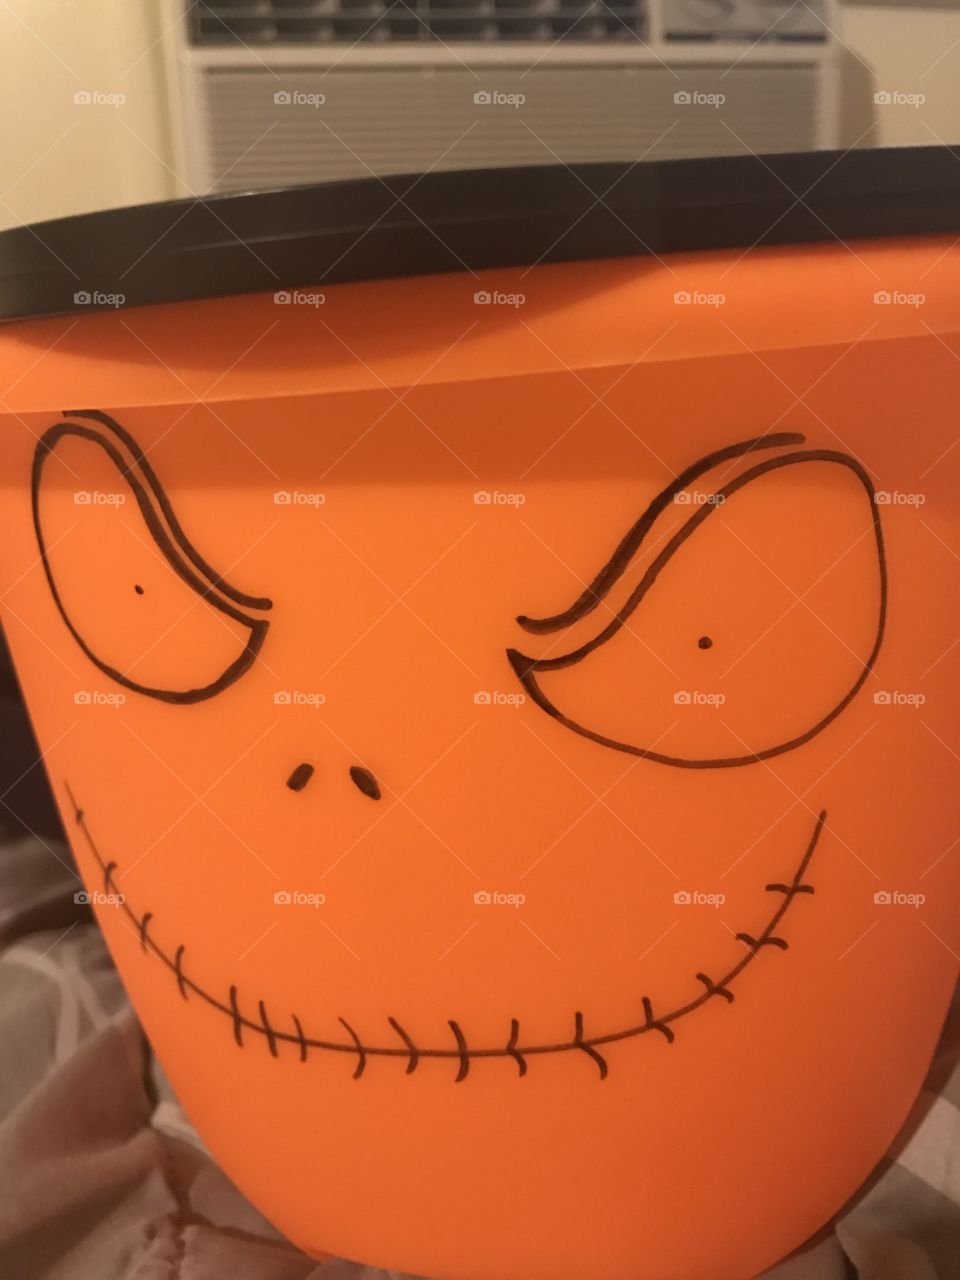 Halloween basket - jack skellington - designed by myself 